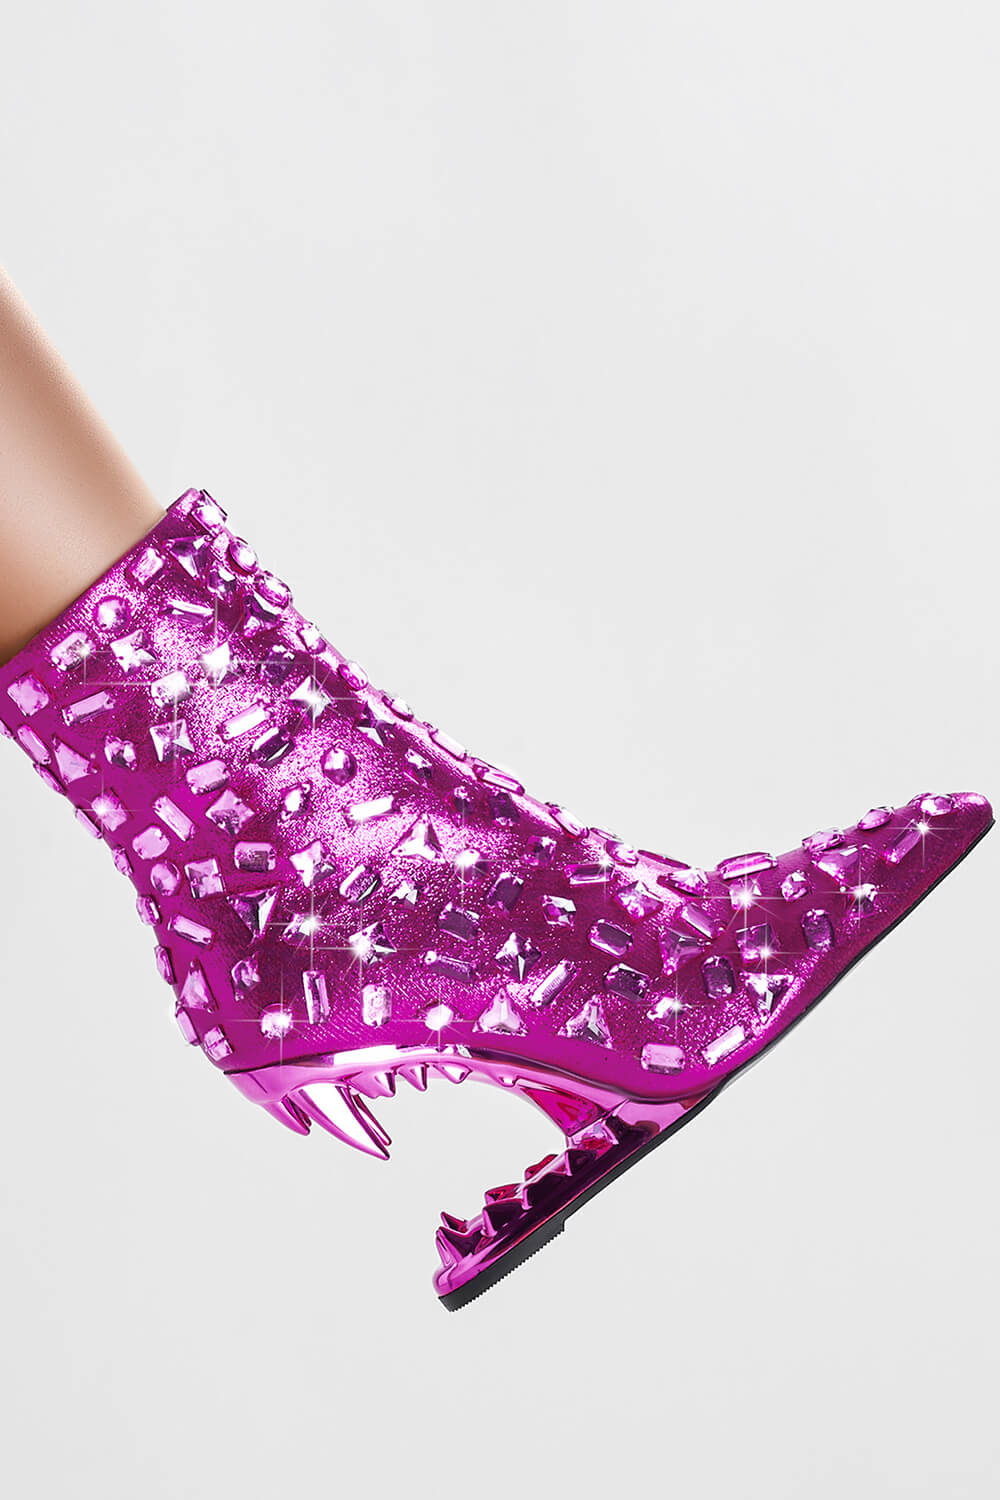 Rhinestone Embellished Pointed Toe Morso Heeled Ankle Boots - Hot Pink